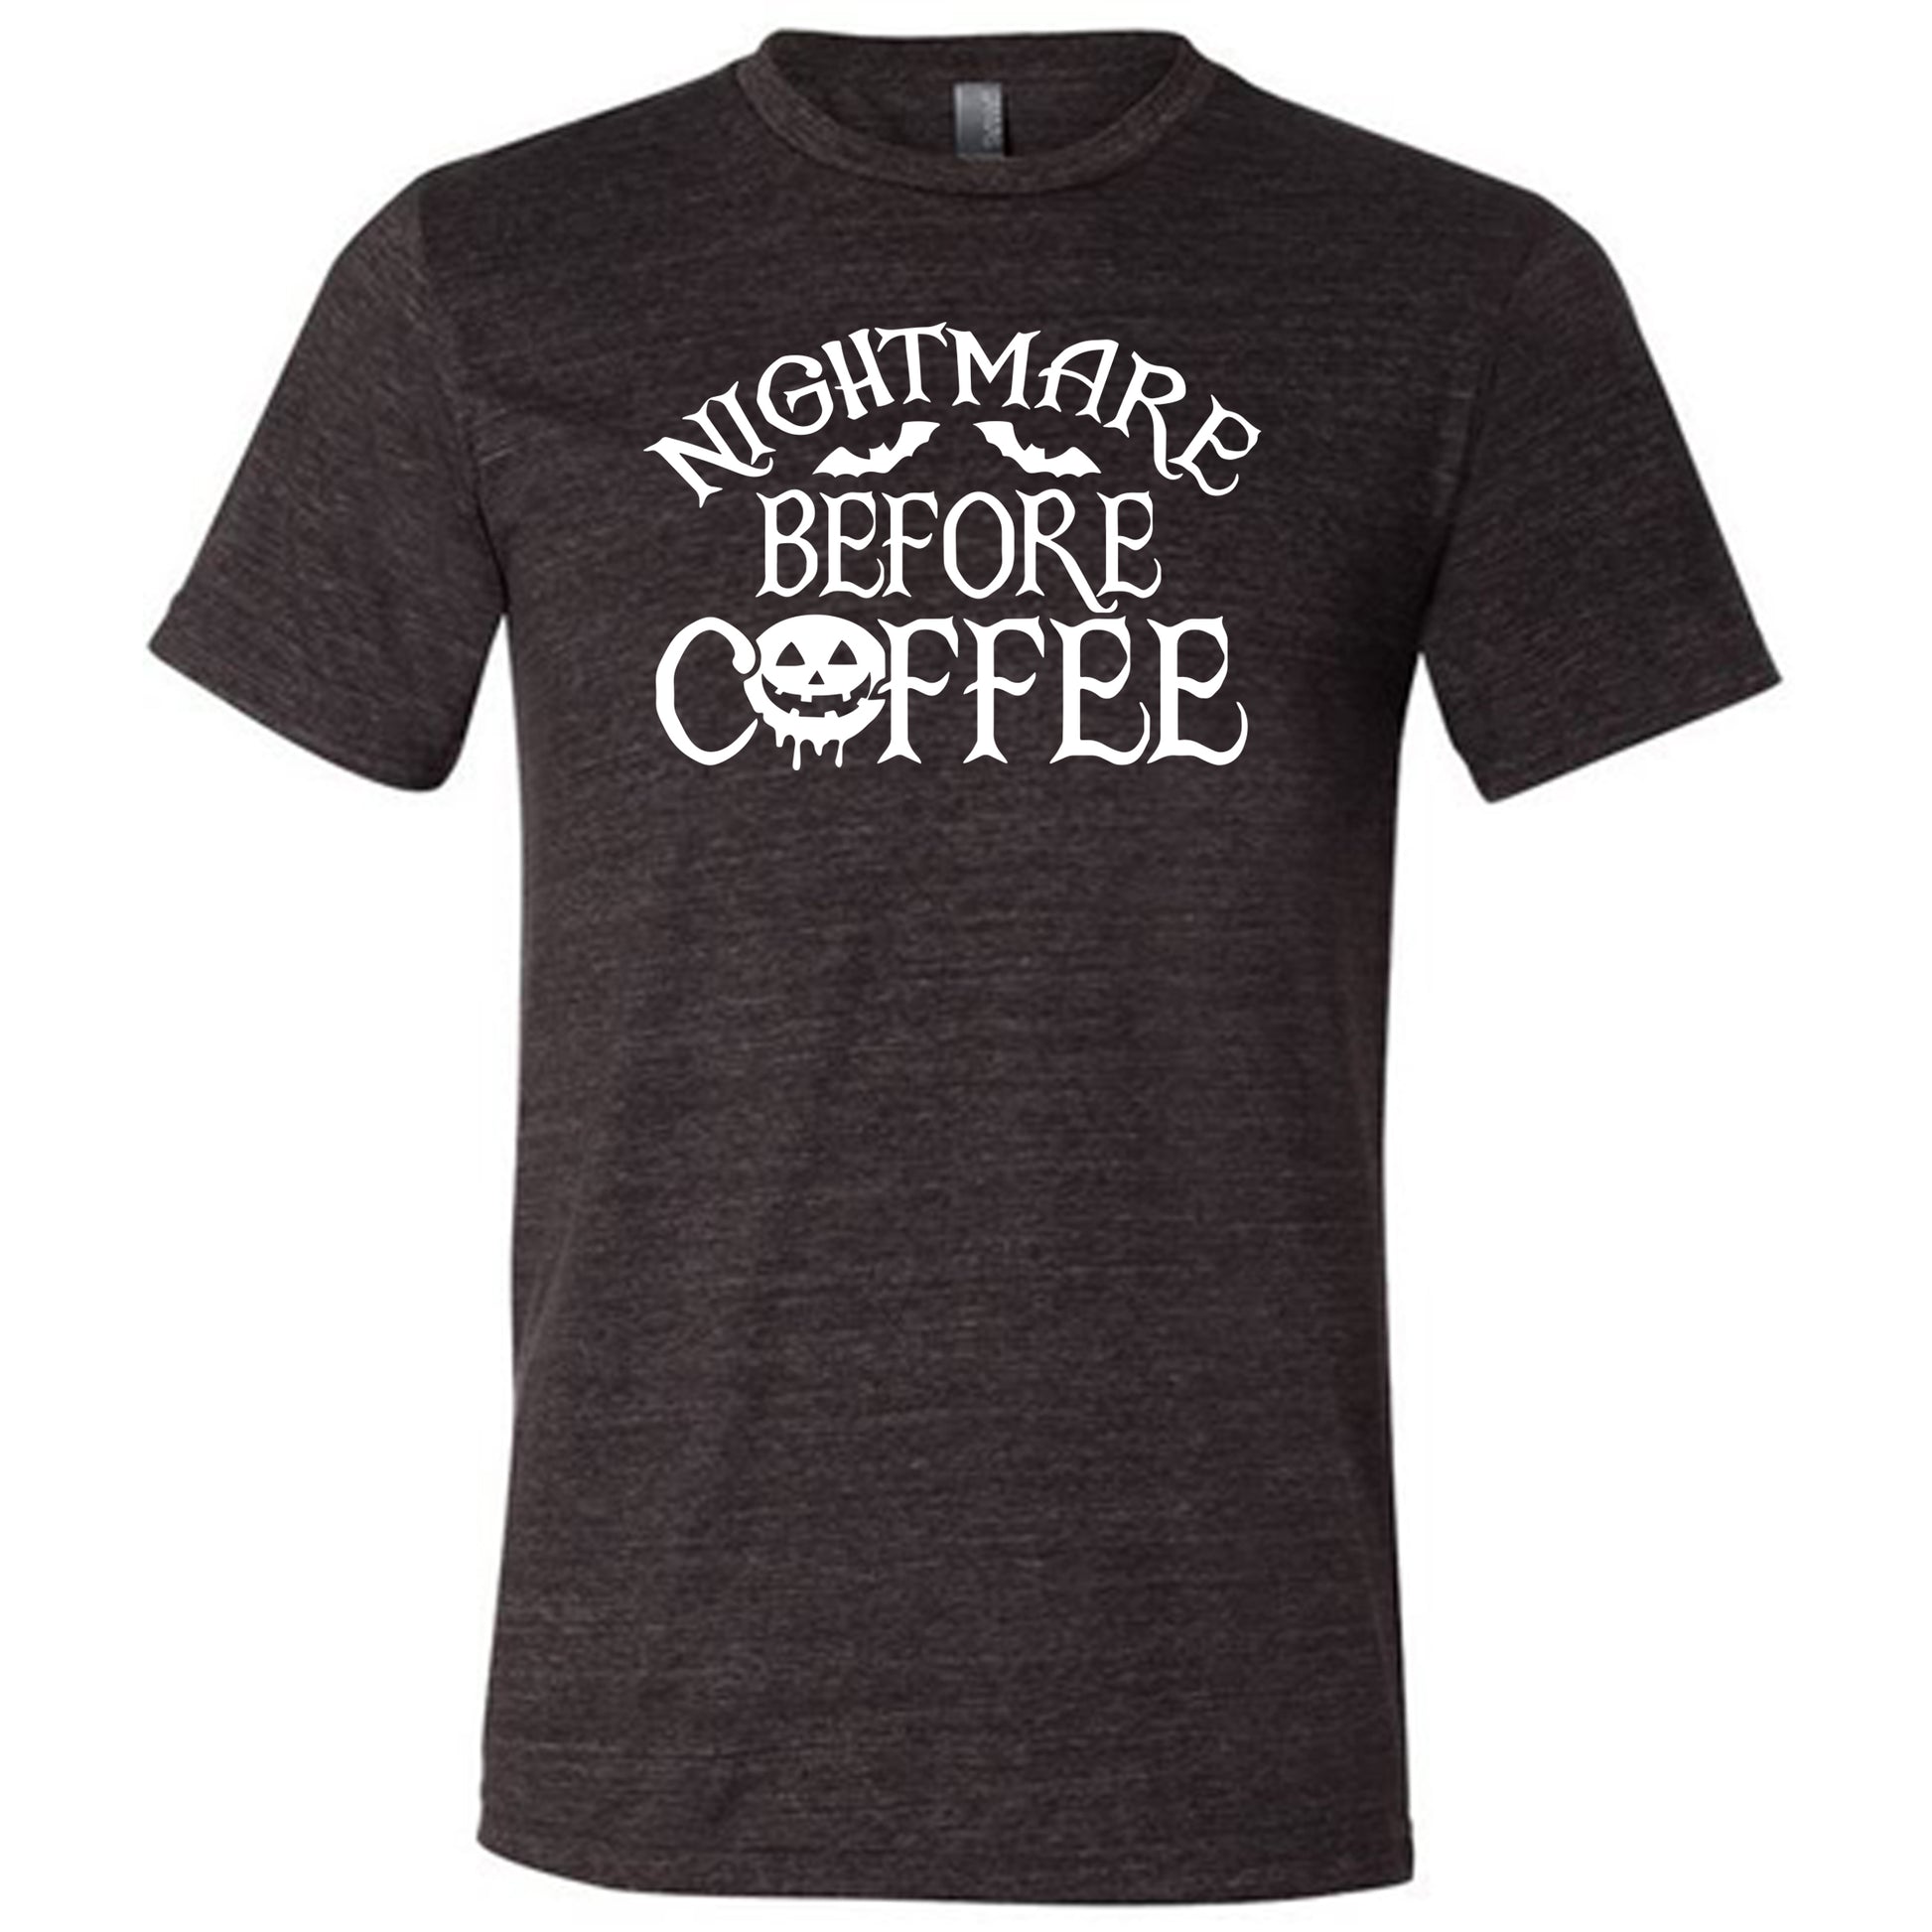 Nightmare Before Coffee unisex black shirt